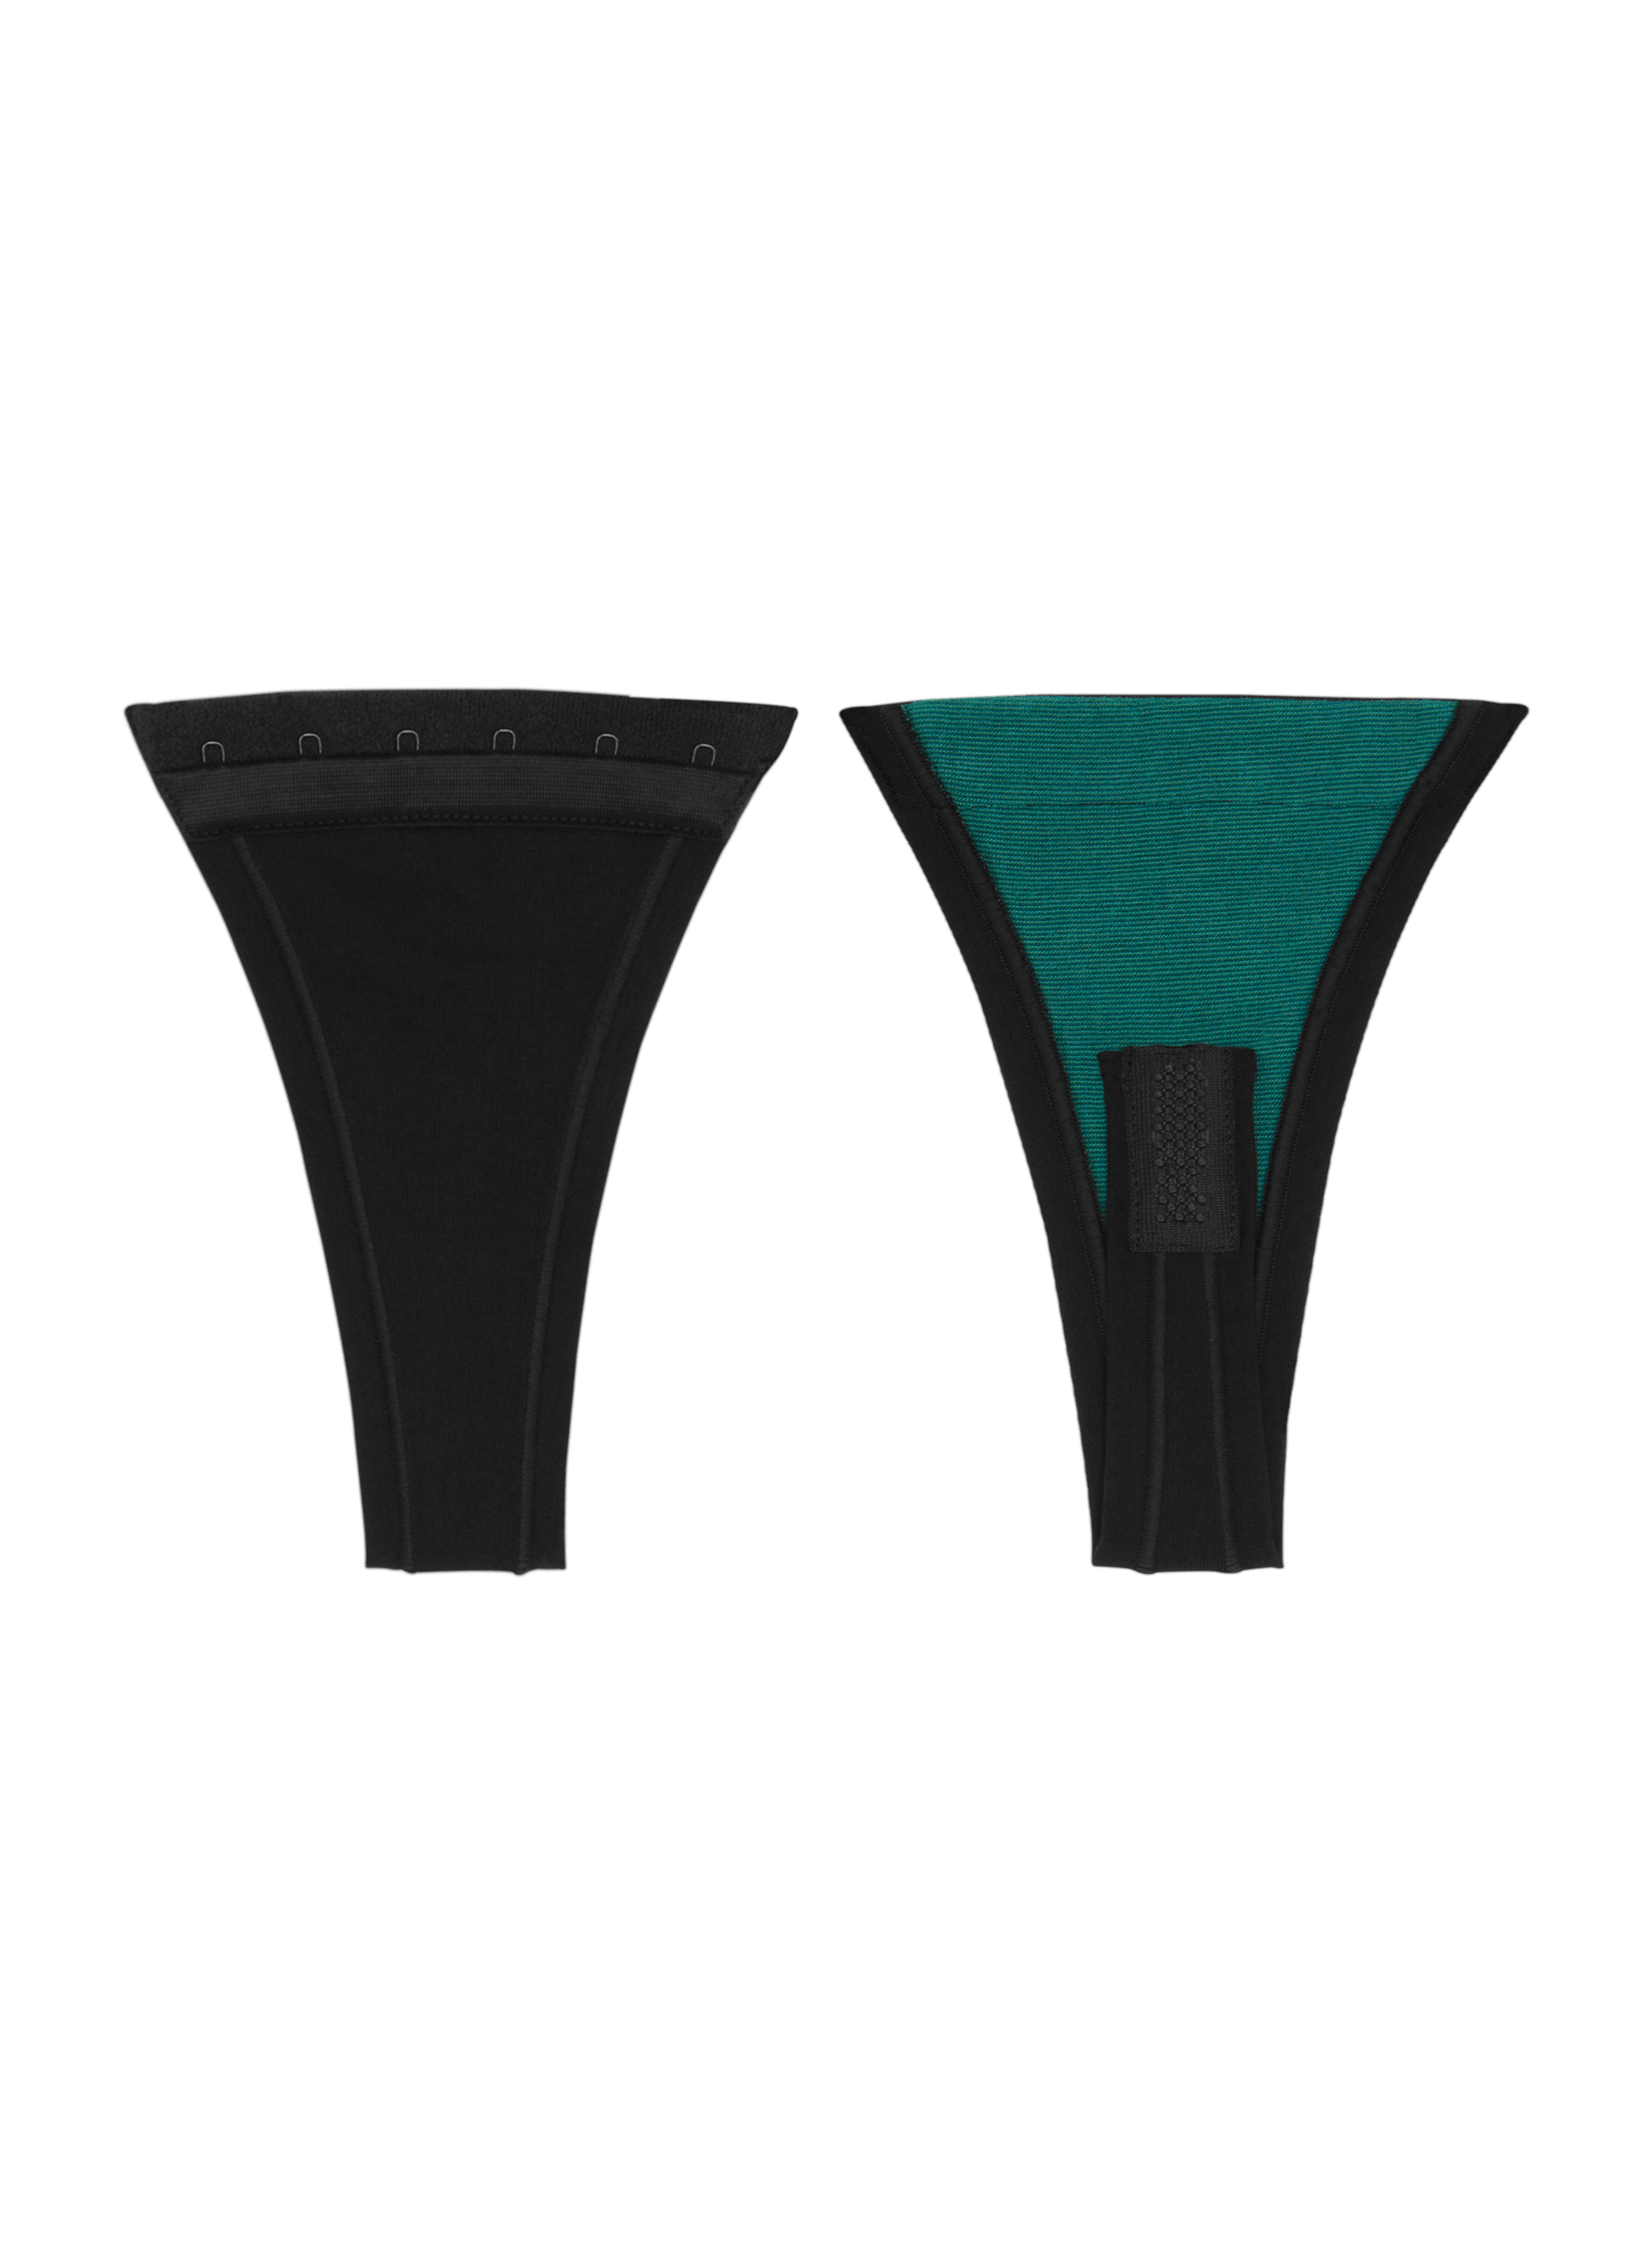 Tata Crop Cami – huha underwear